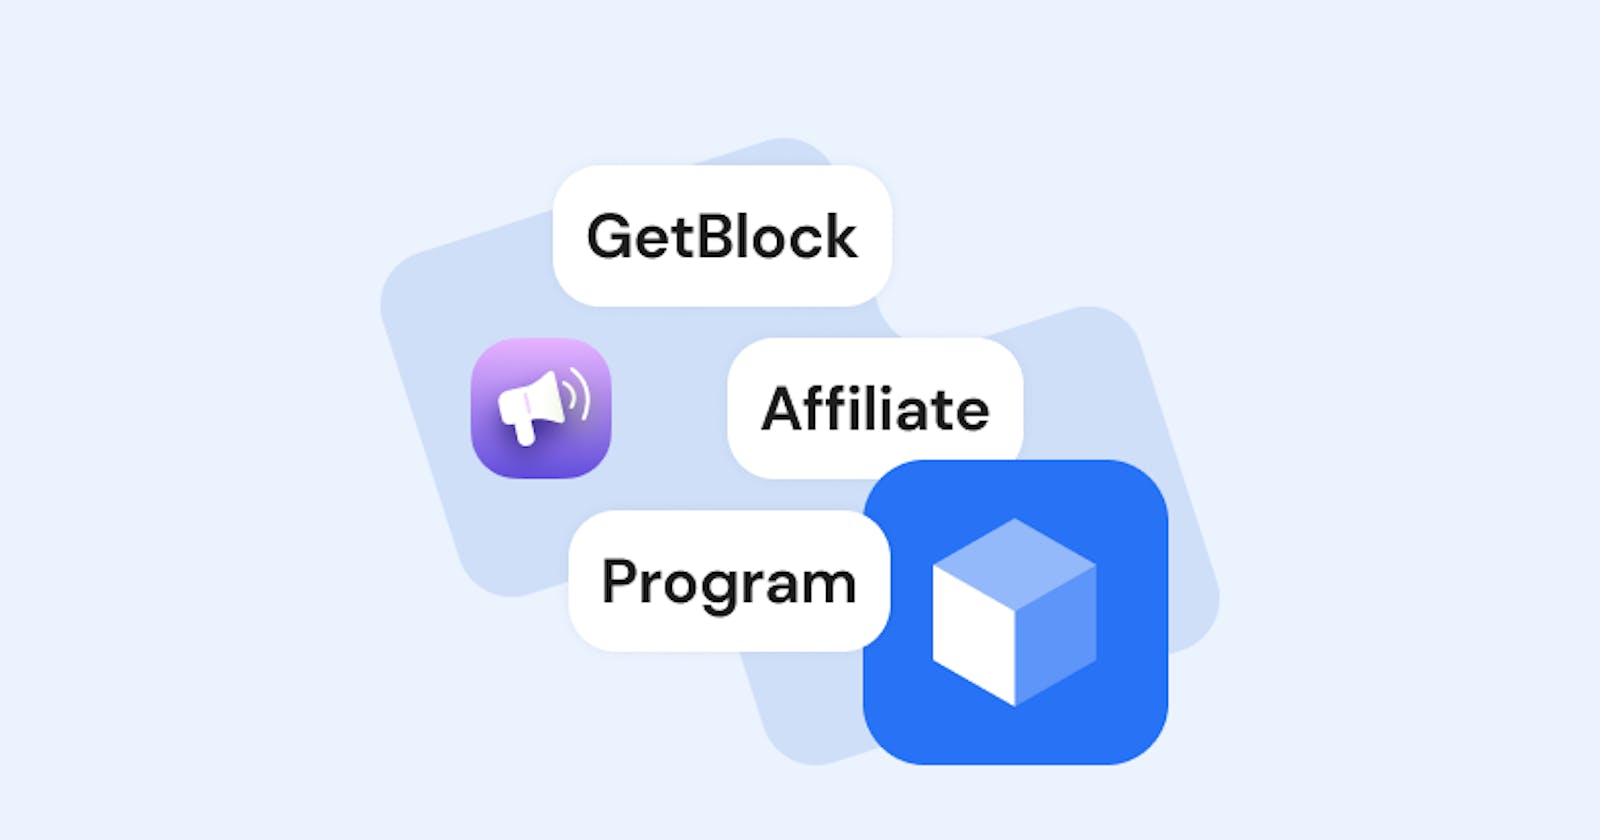 GetBlock RPC Node Provider Launches Affiliate Program with Cash Bonuses